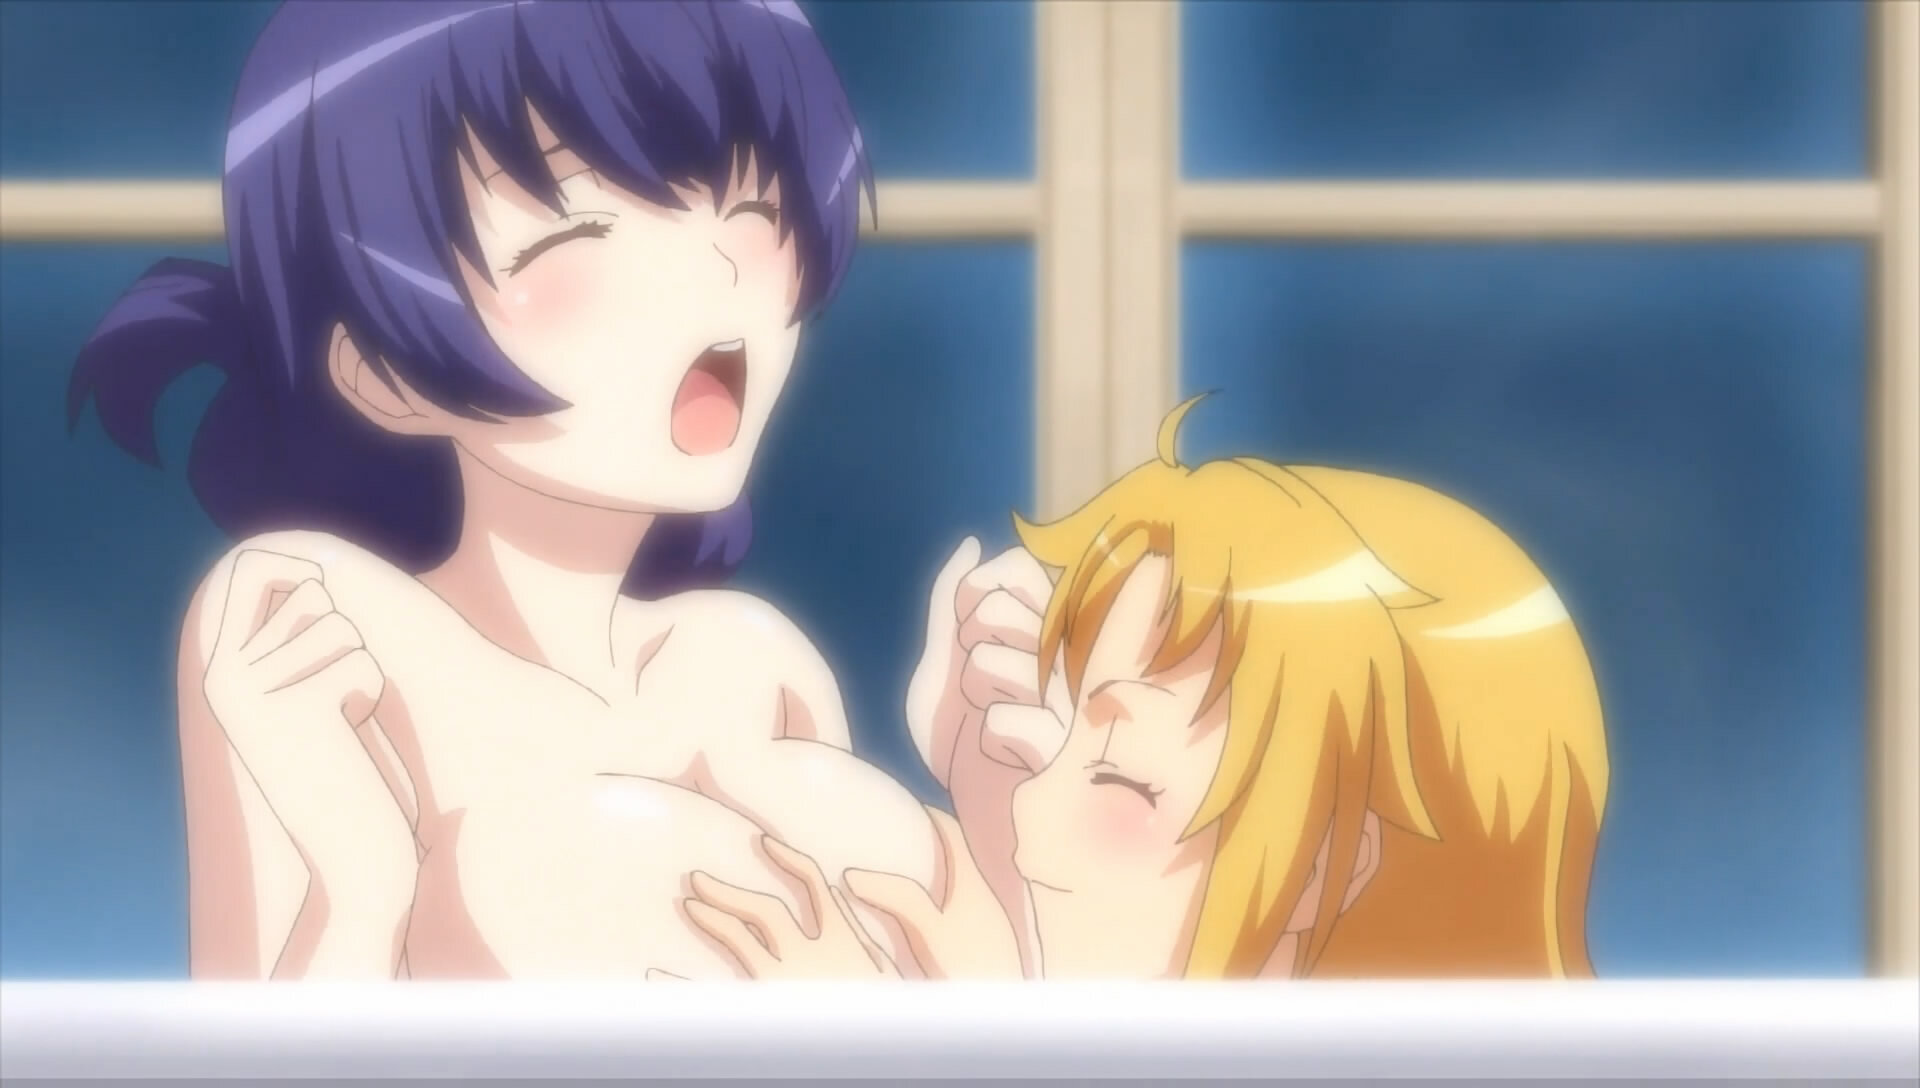 Adult erotic anime